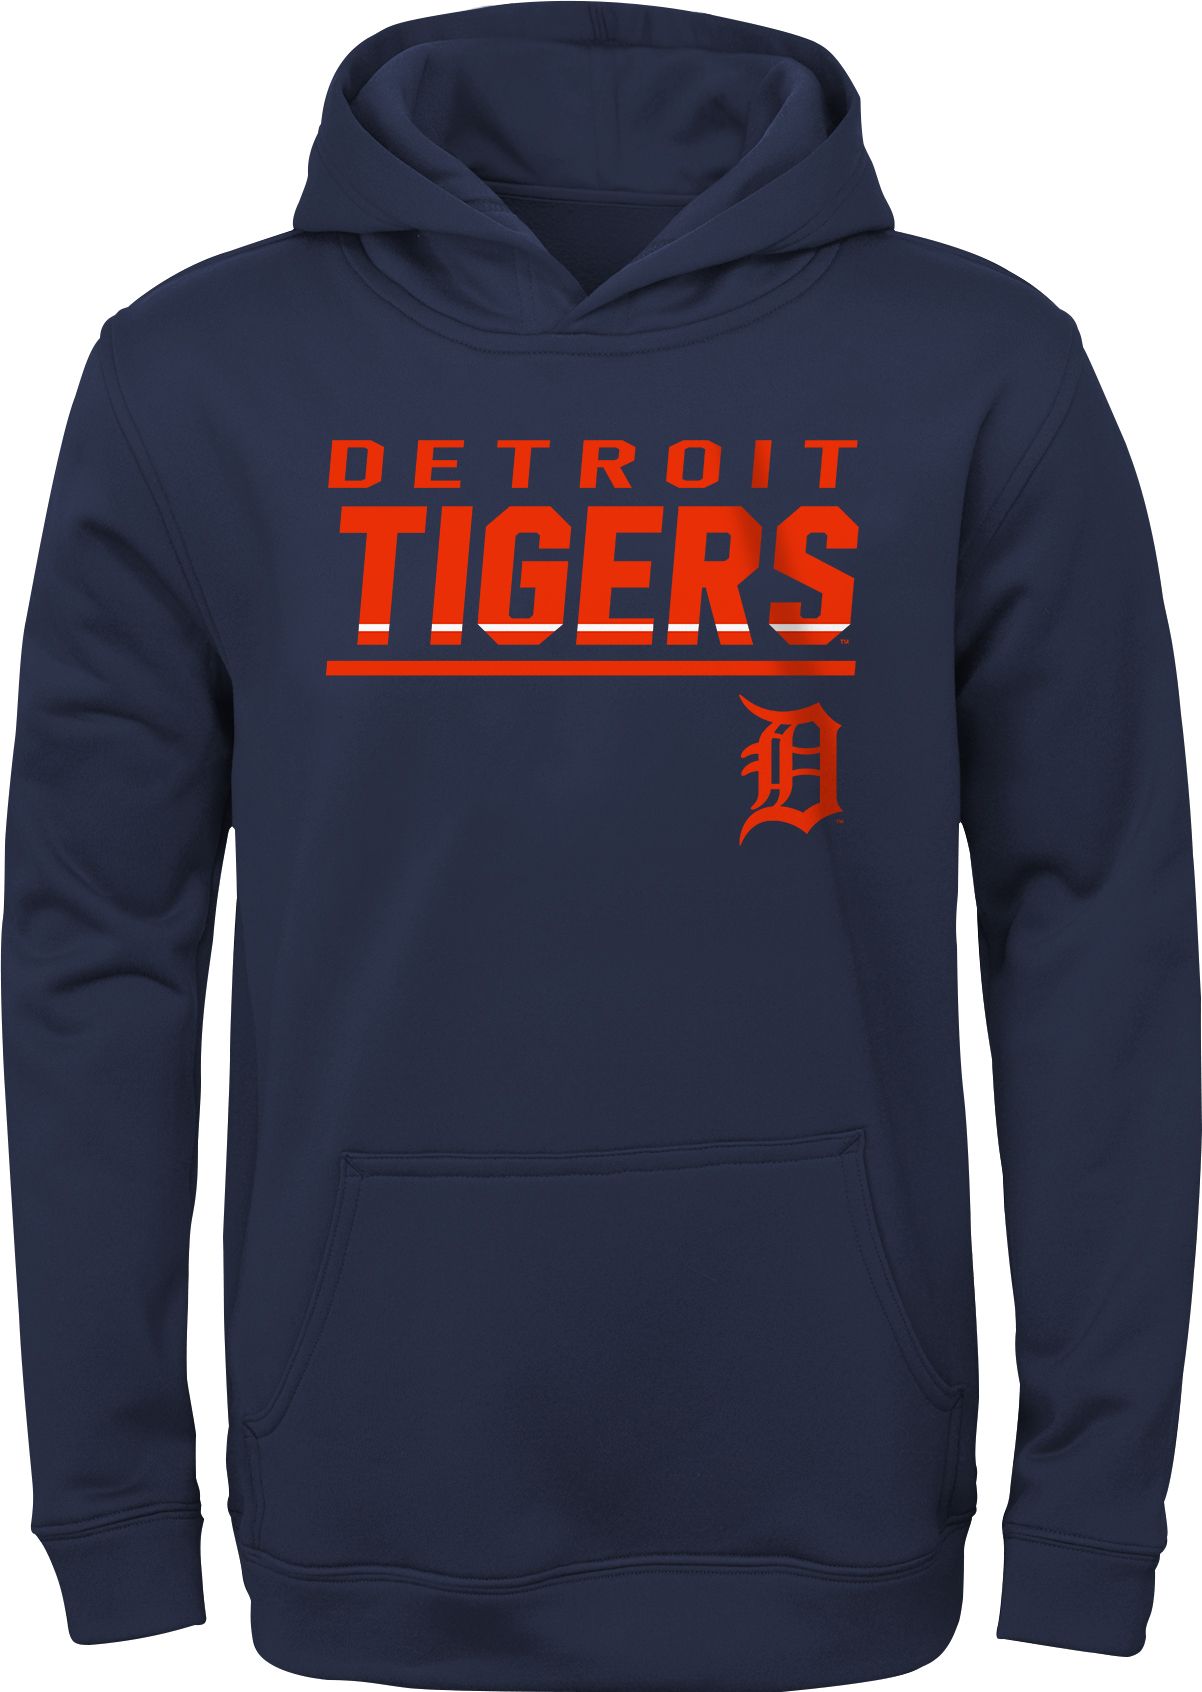 detroit tigers official gear